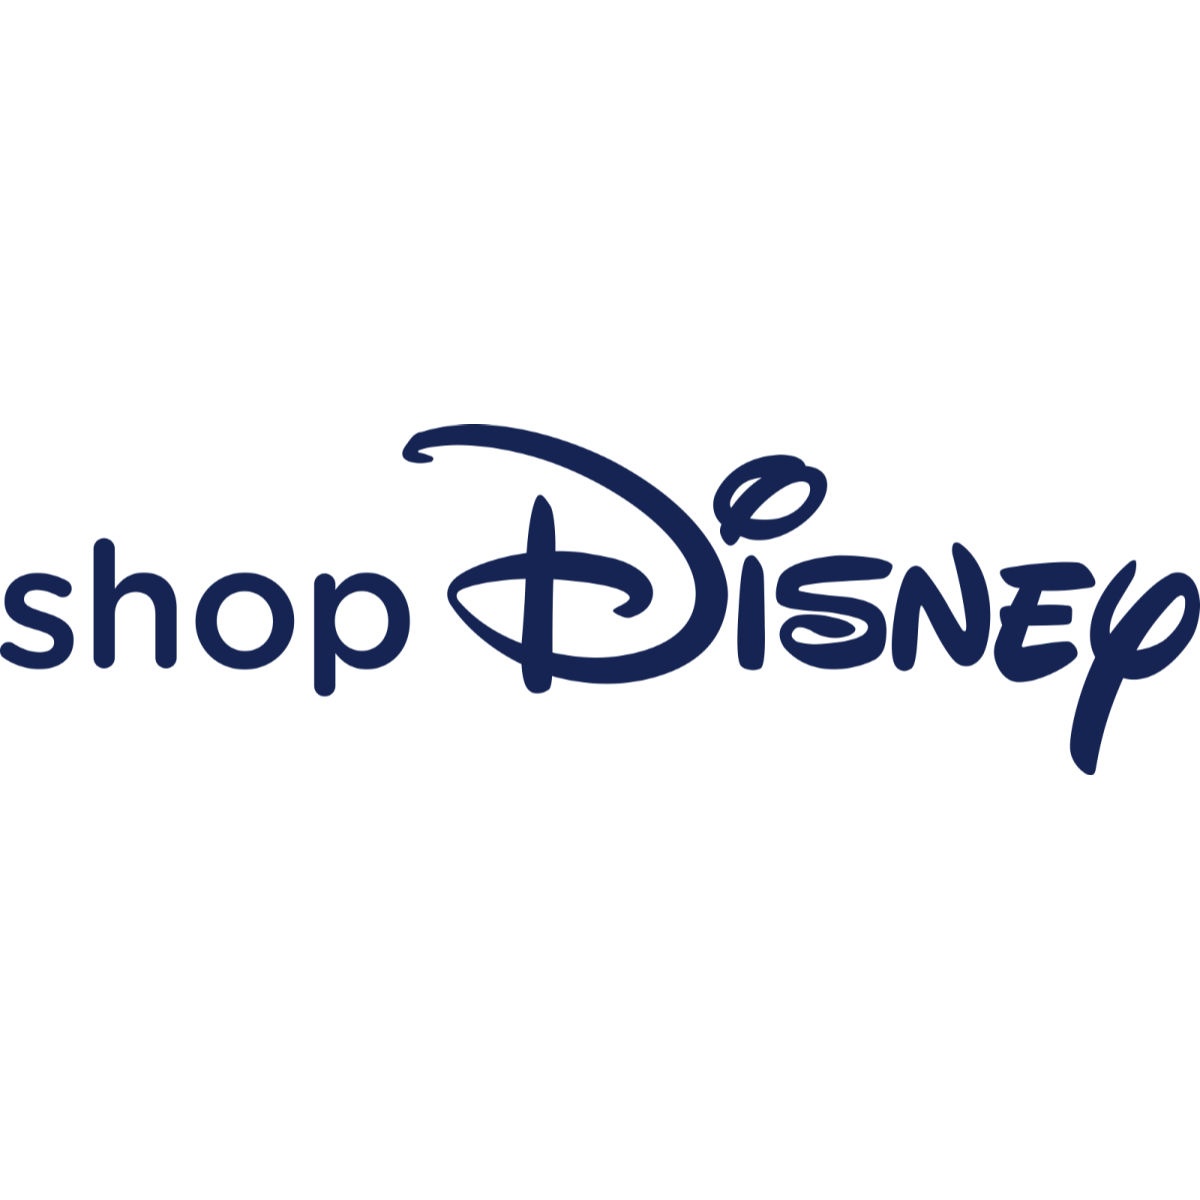 shopDisney Logo